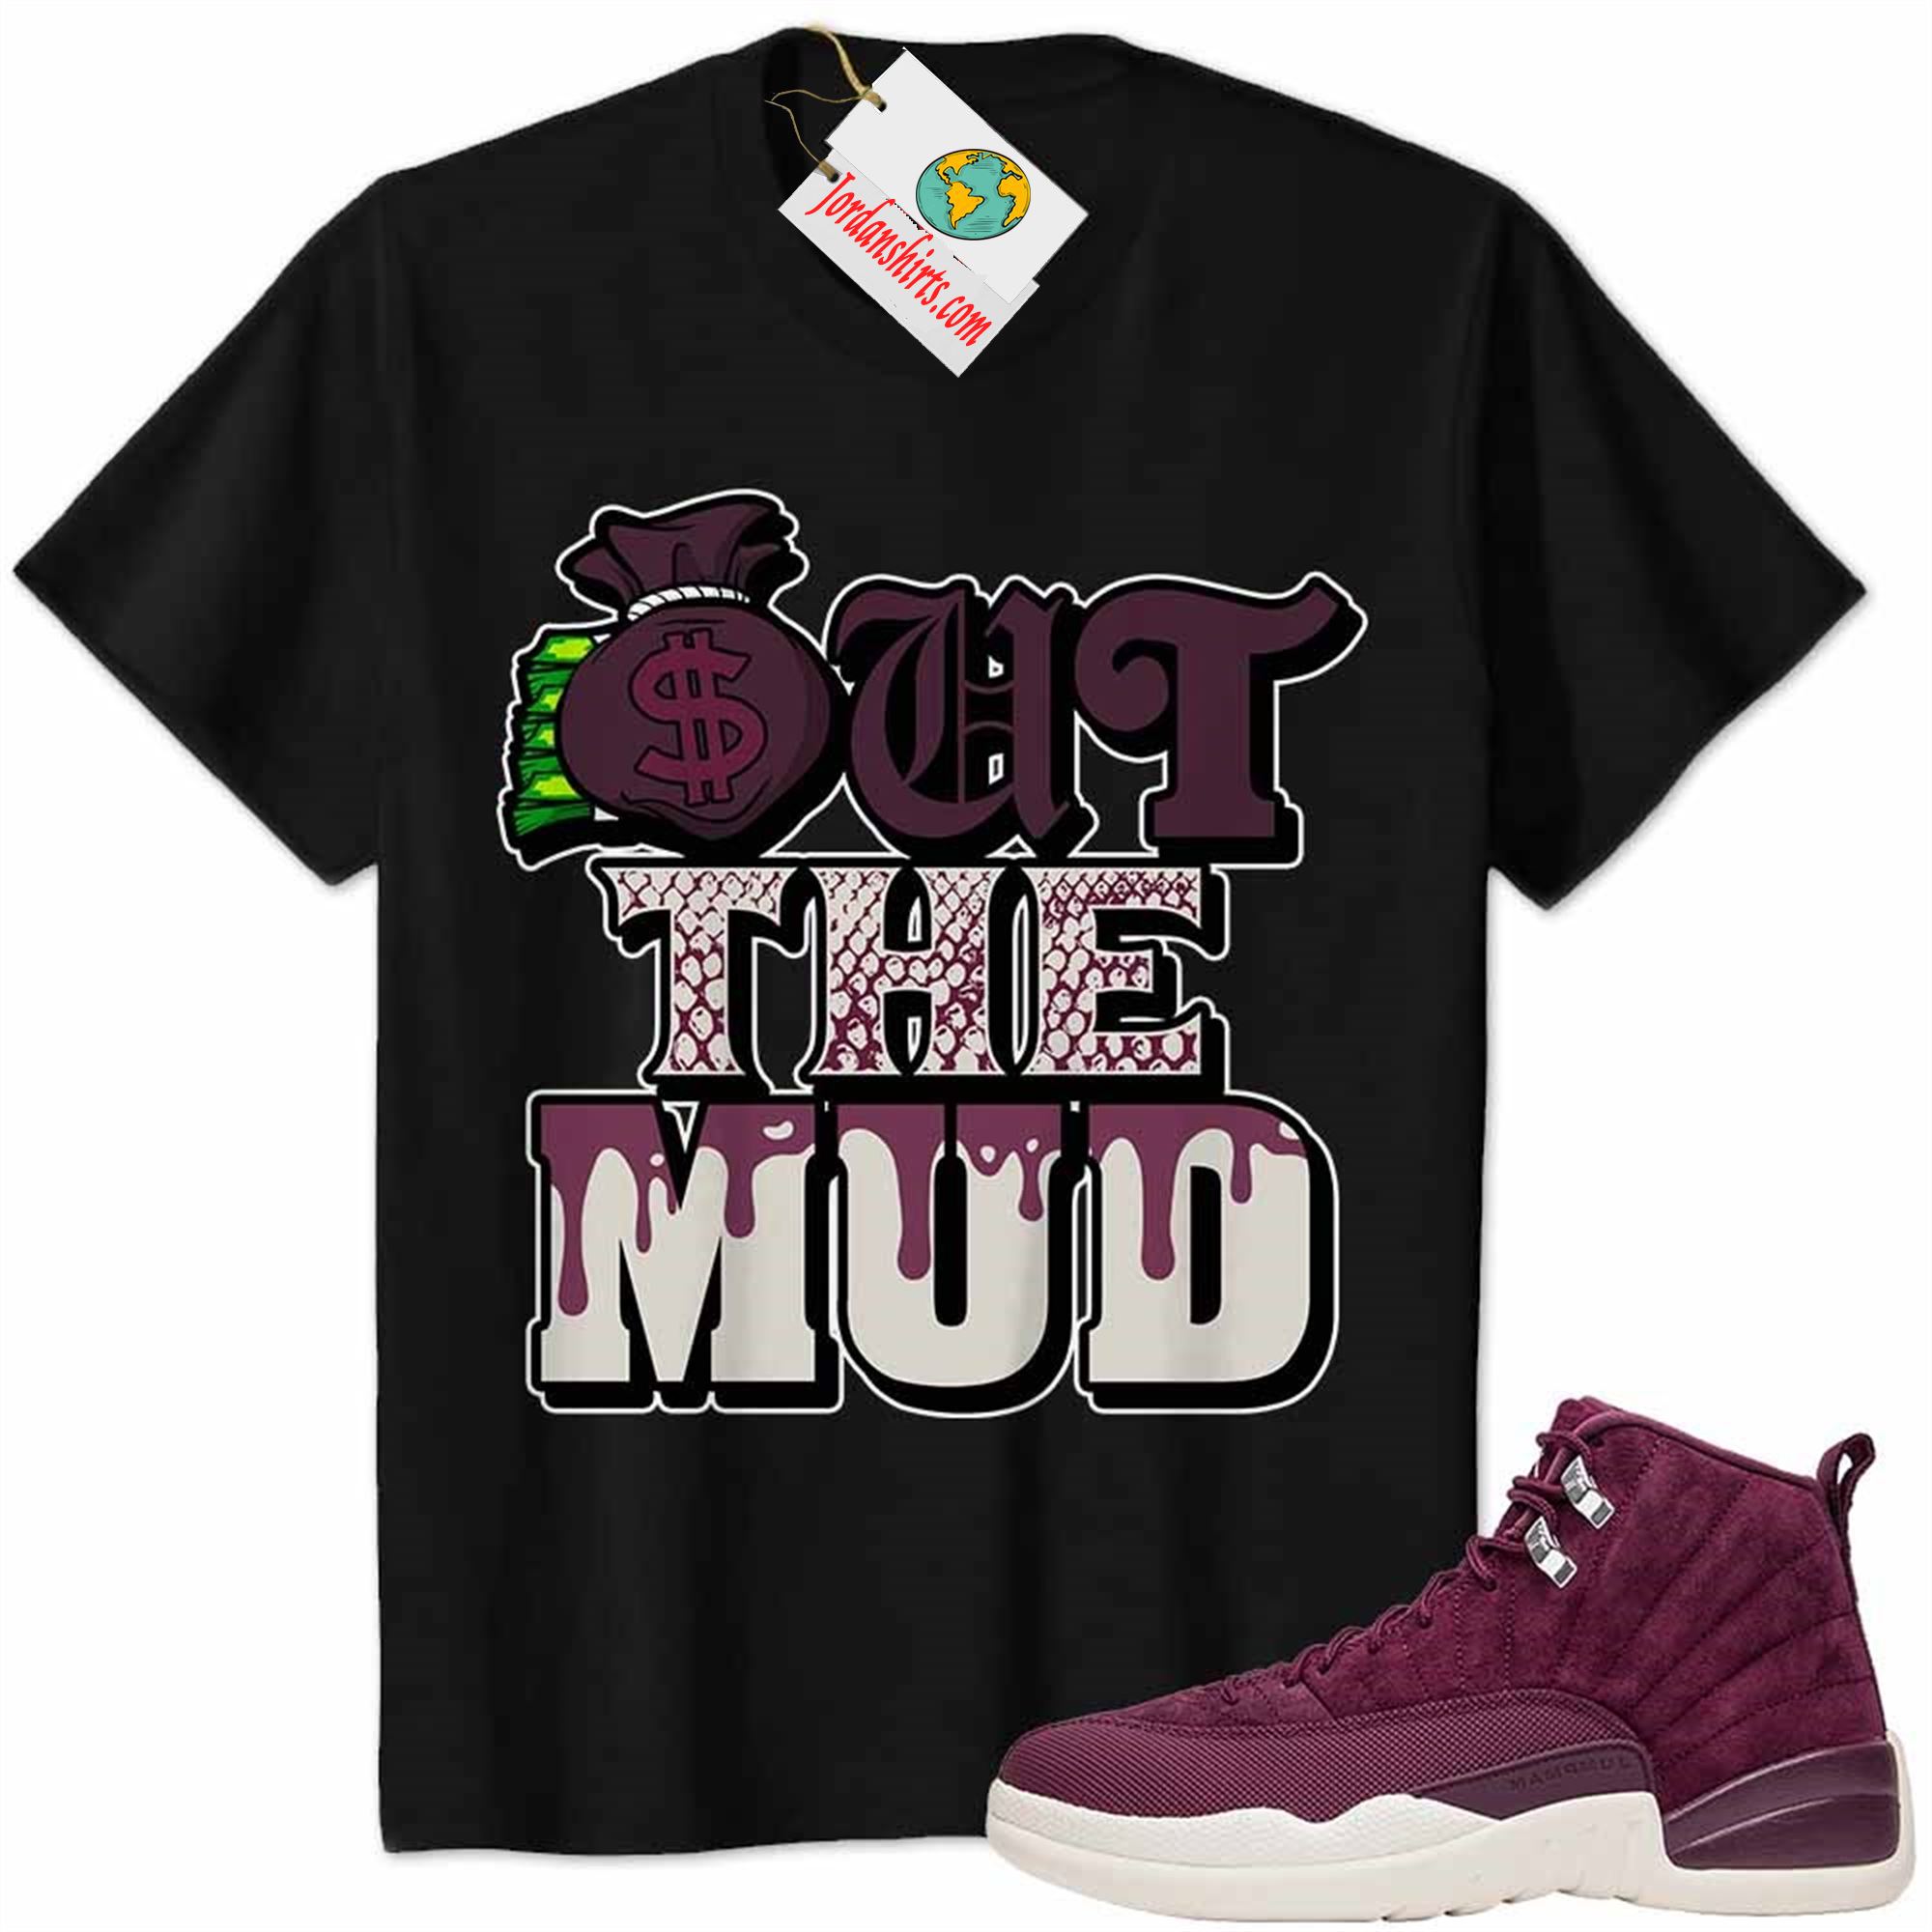 Jordan 12 Shirt, Jordan 12 Bordeaux Shirt Out The Mud Money Bag Black Full Size Up To 5xl